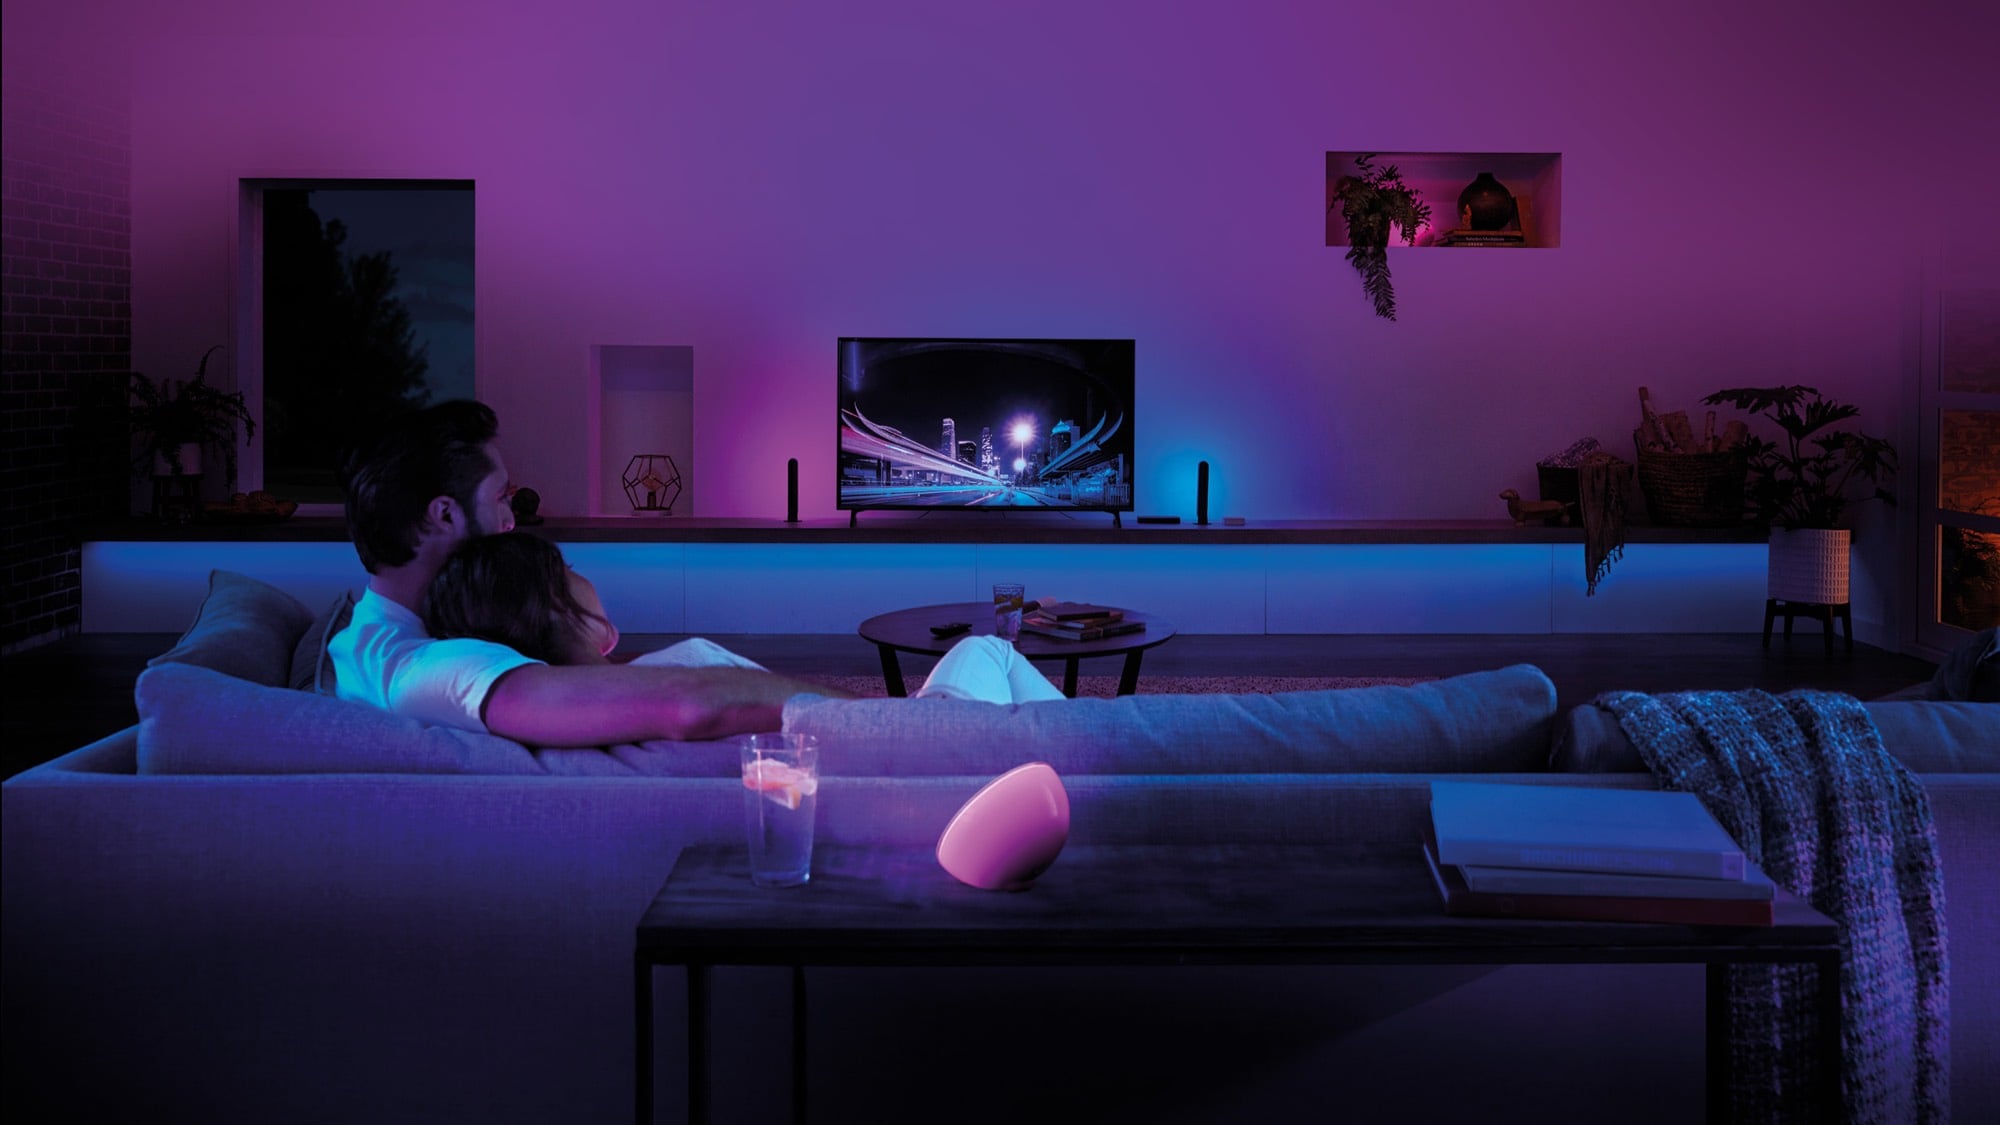 Sync smart lights to TV